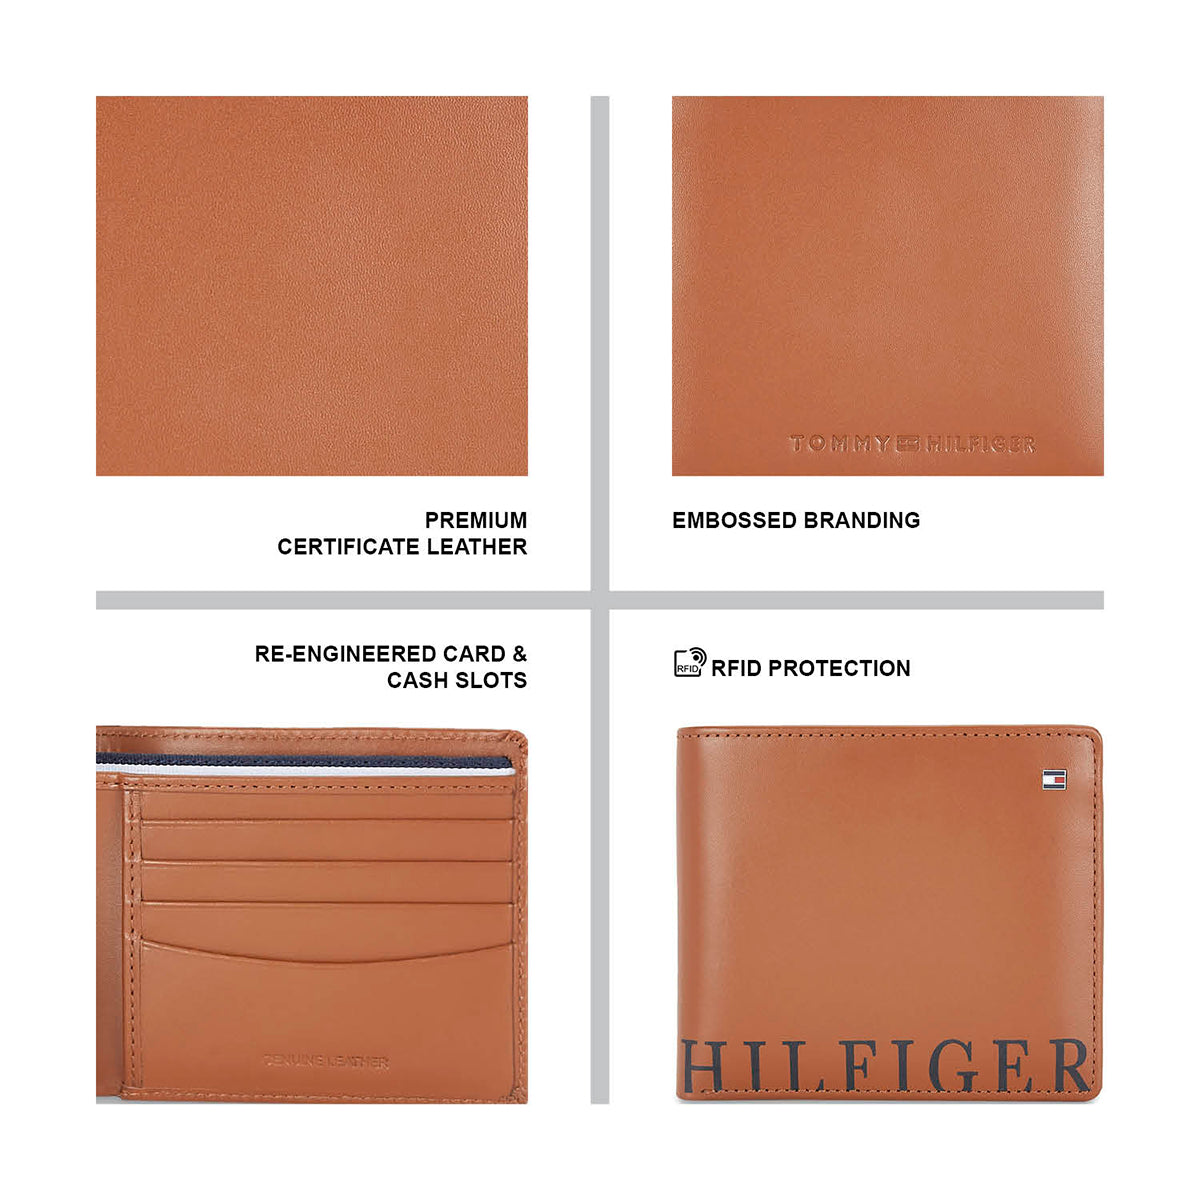 Tommy Hilfiger Horten Men's Leather Wallet Tan